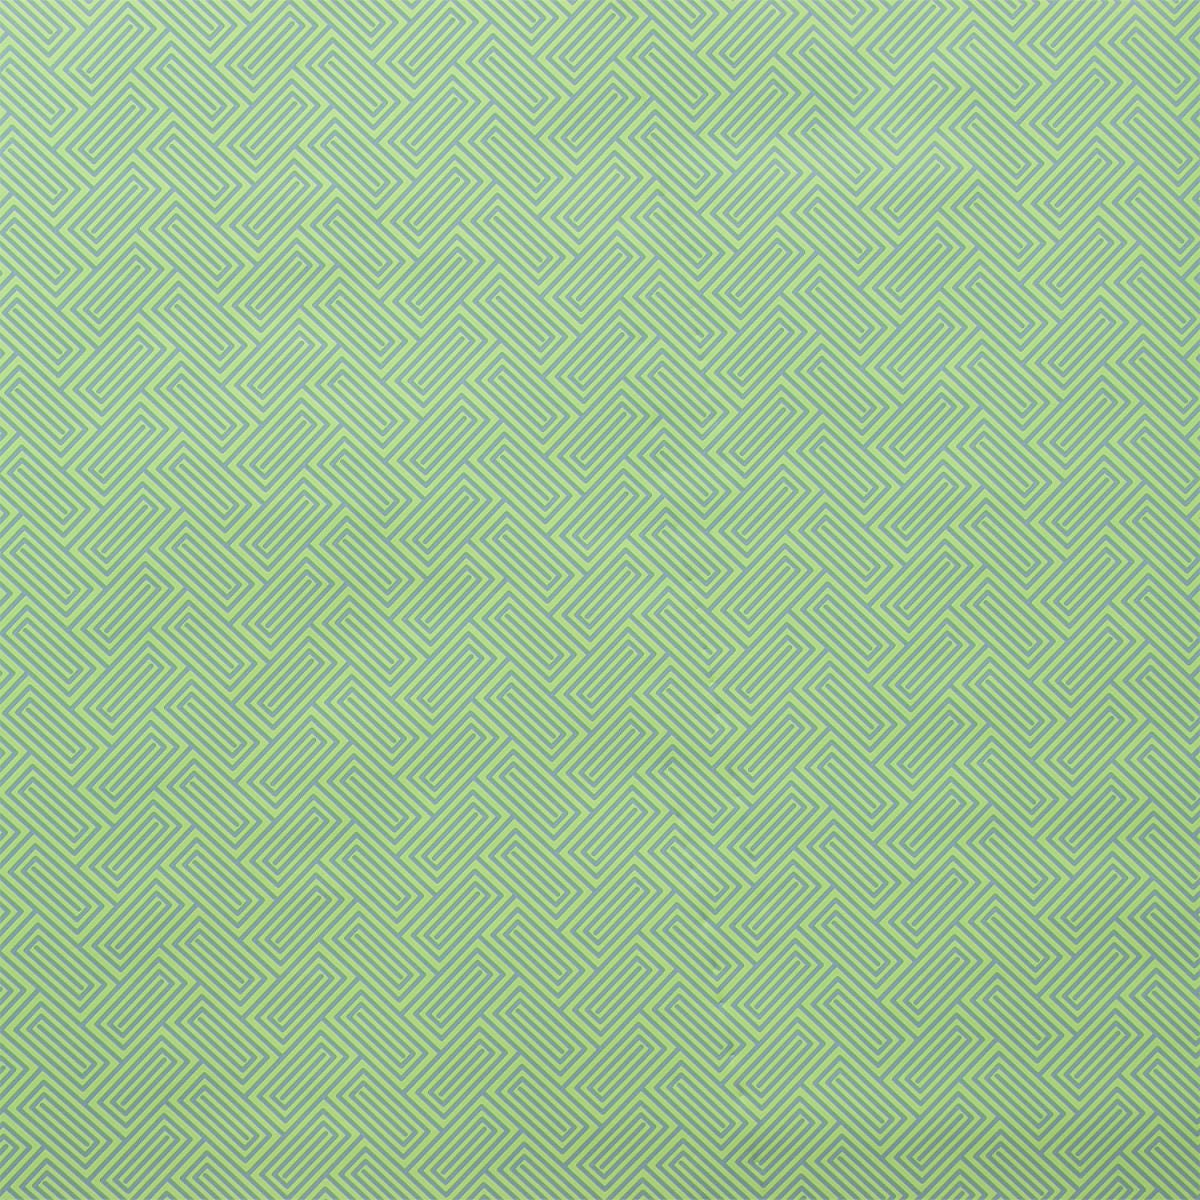 Autocolant geometric 3699, verde, 0.45 x 2 m